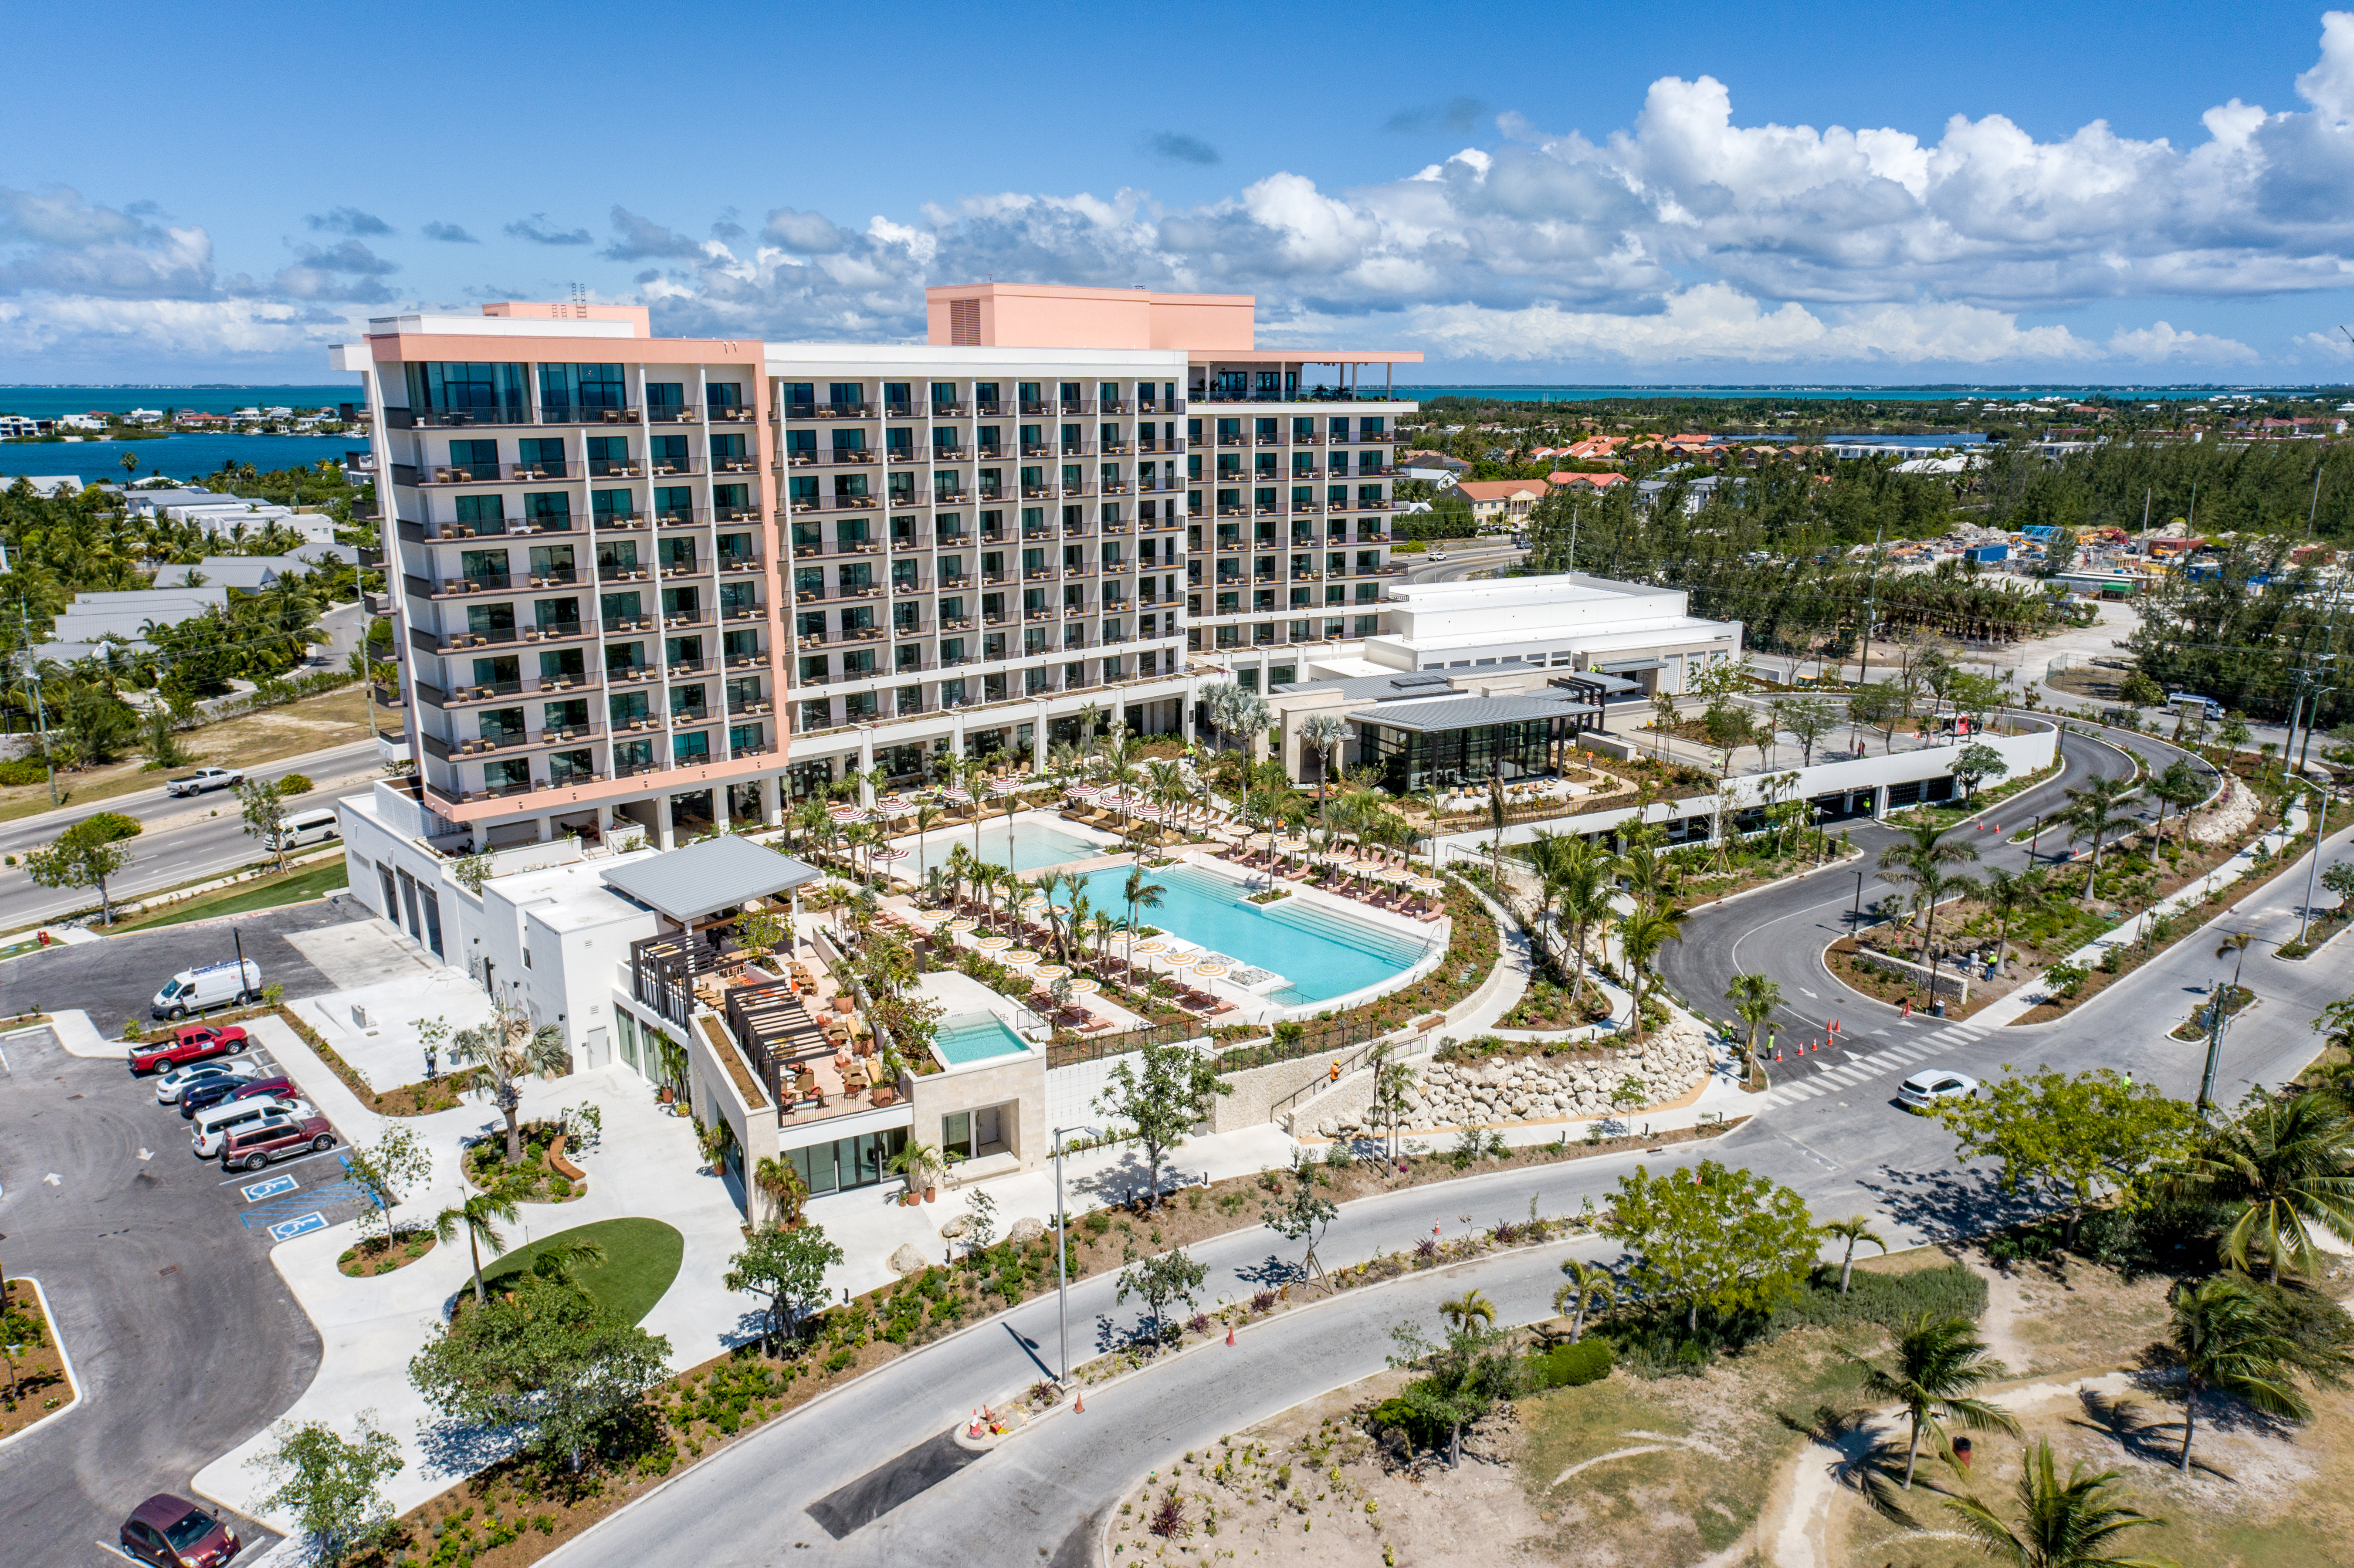 Drone shot of Hotel Indigo Grand Cayman